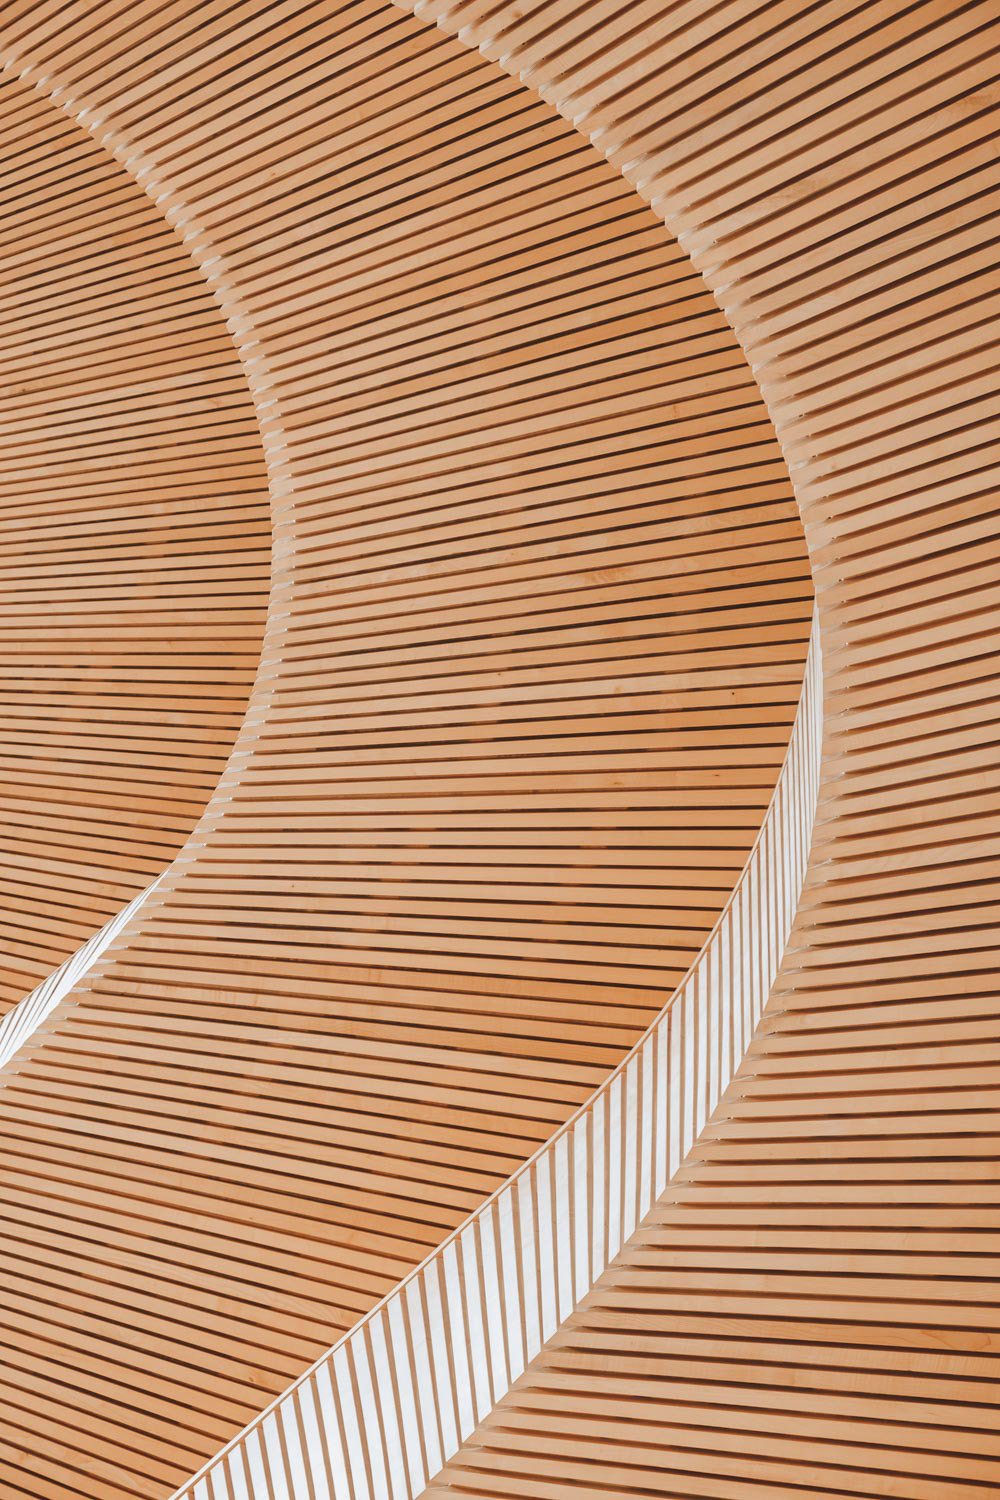 architecture abstract minimal Zurich geometric modern